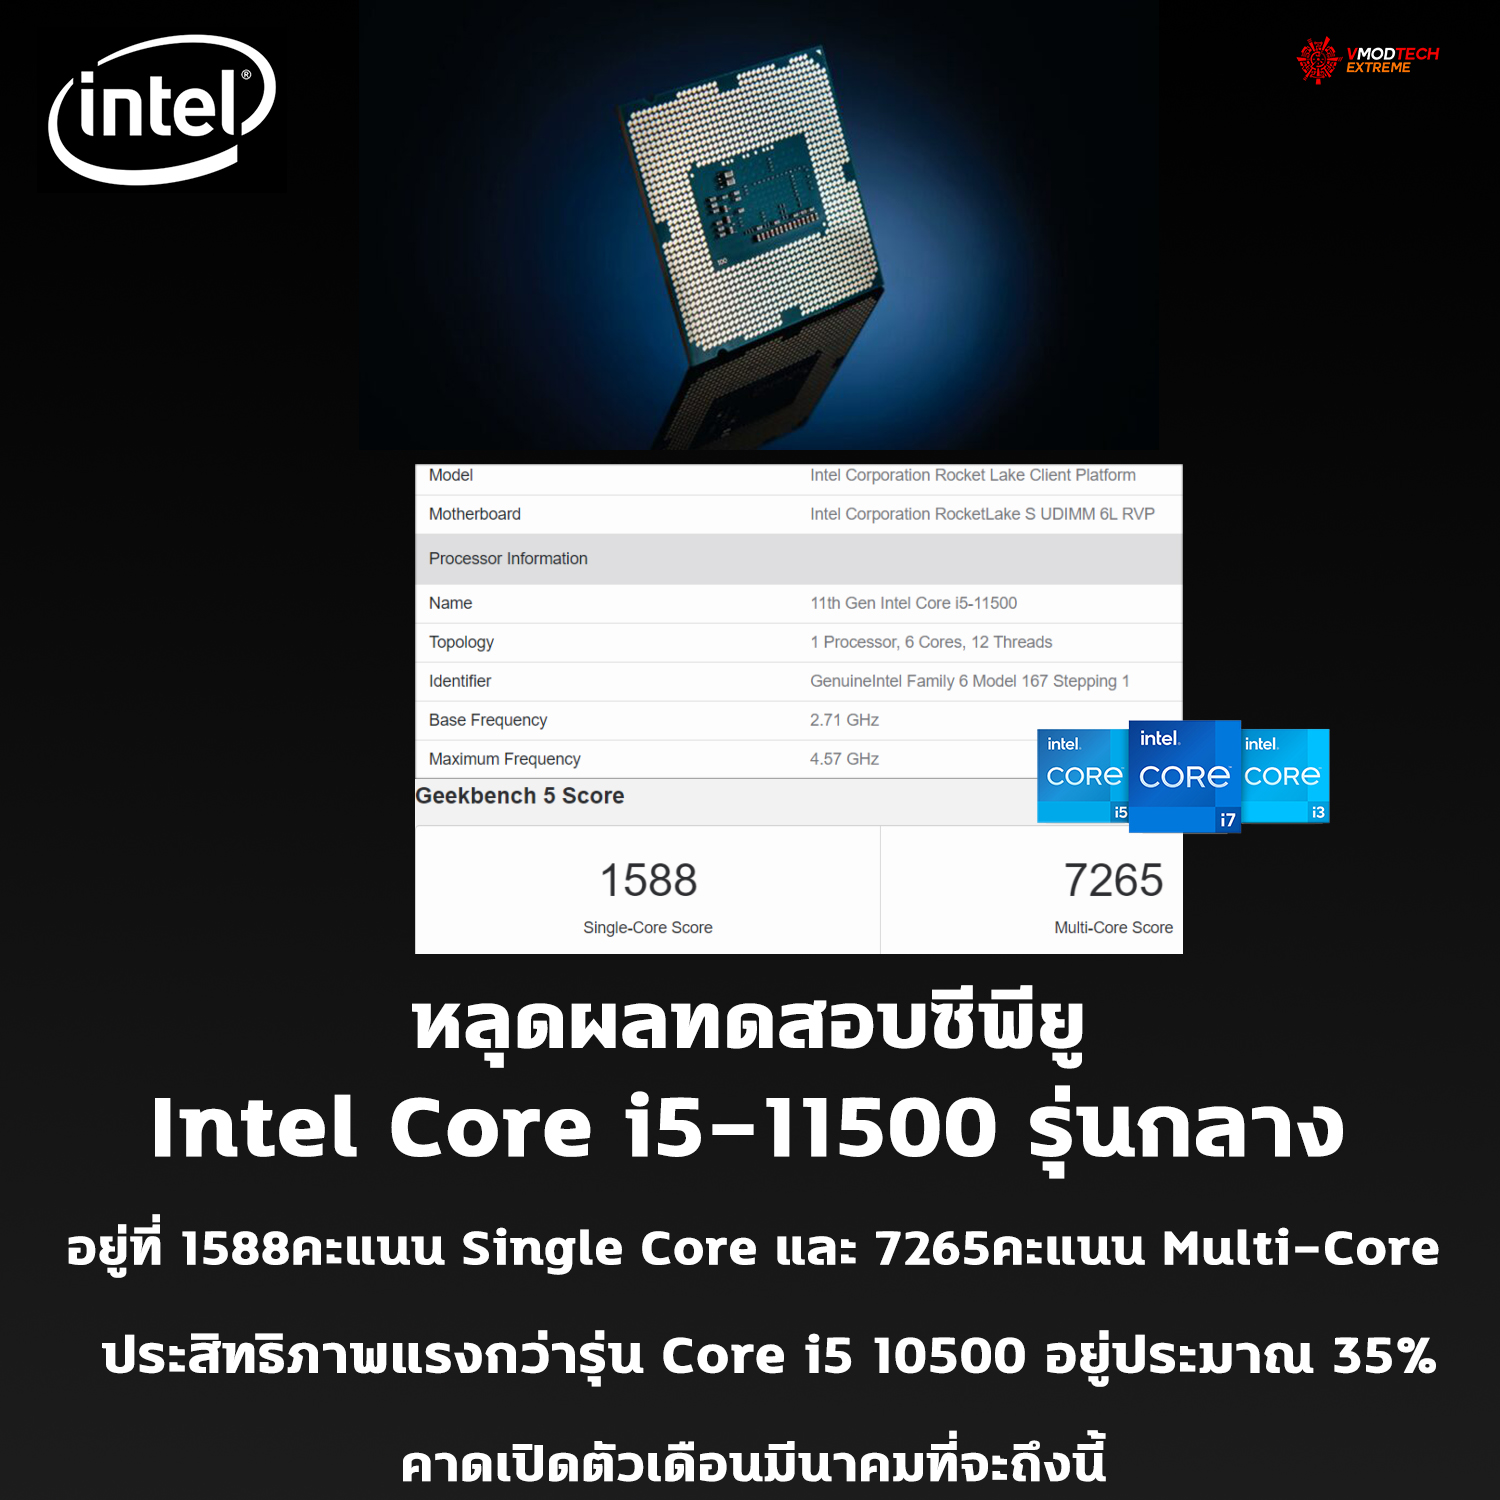 intel core i5 11500 benchmark หลุดผลทดสอบซีพียู Intel Core i5 11500 อย่างไม่เป็นทางการ